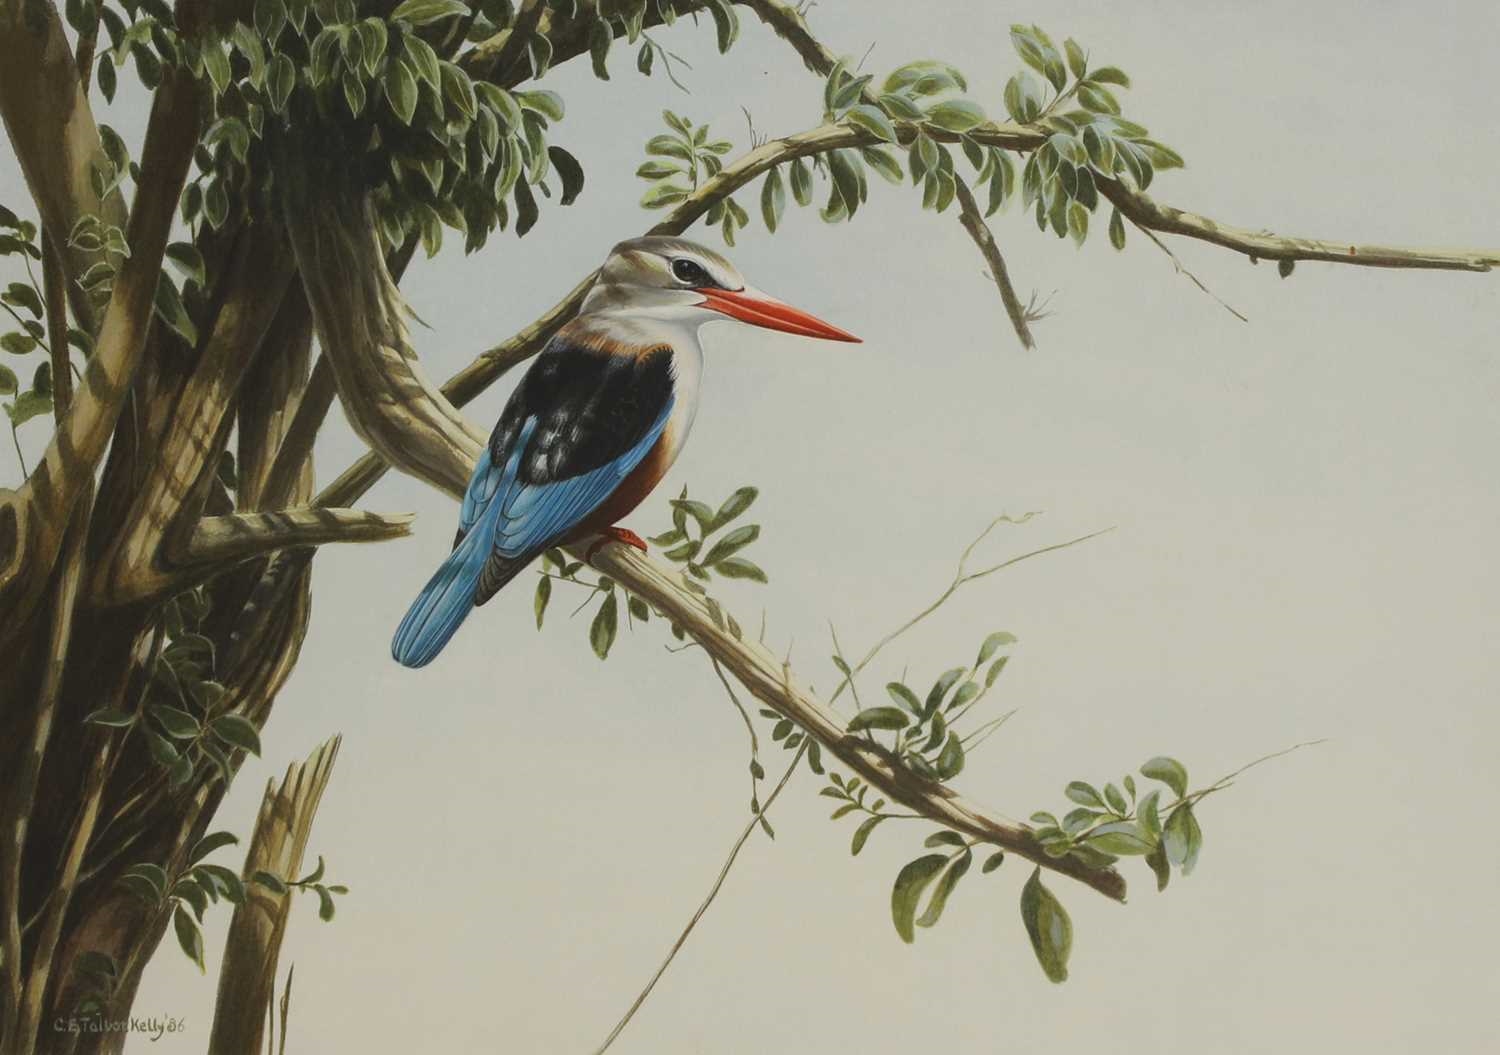 Grey-headed kingfisher by Chloë Talbot-Kelly, '86